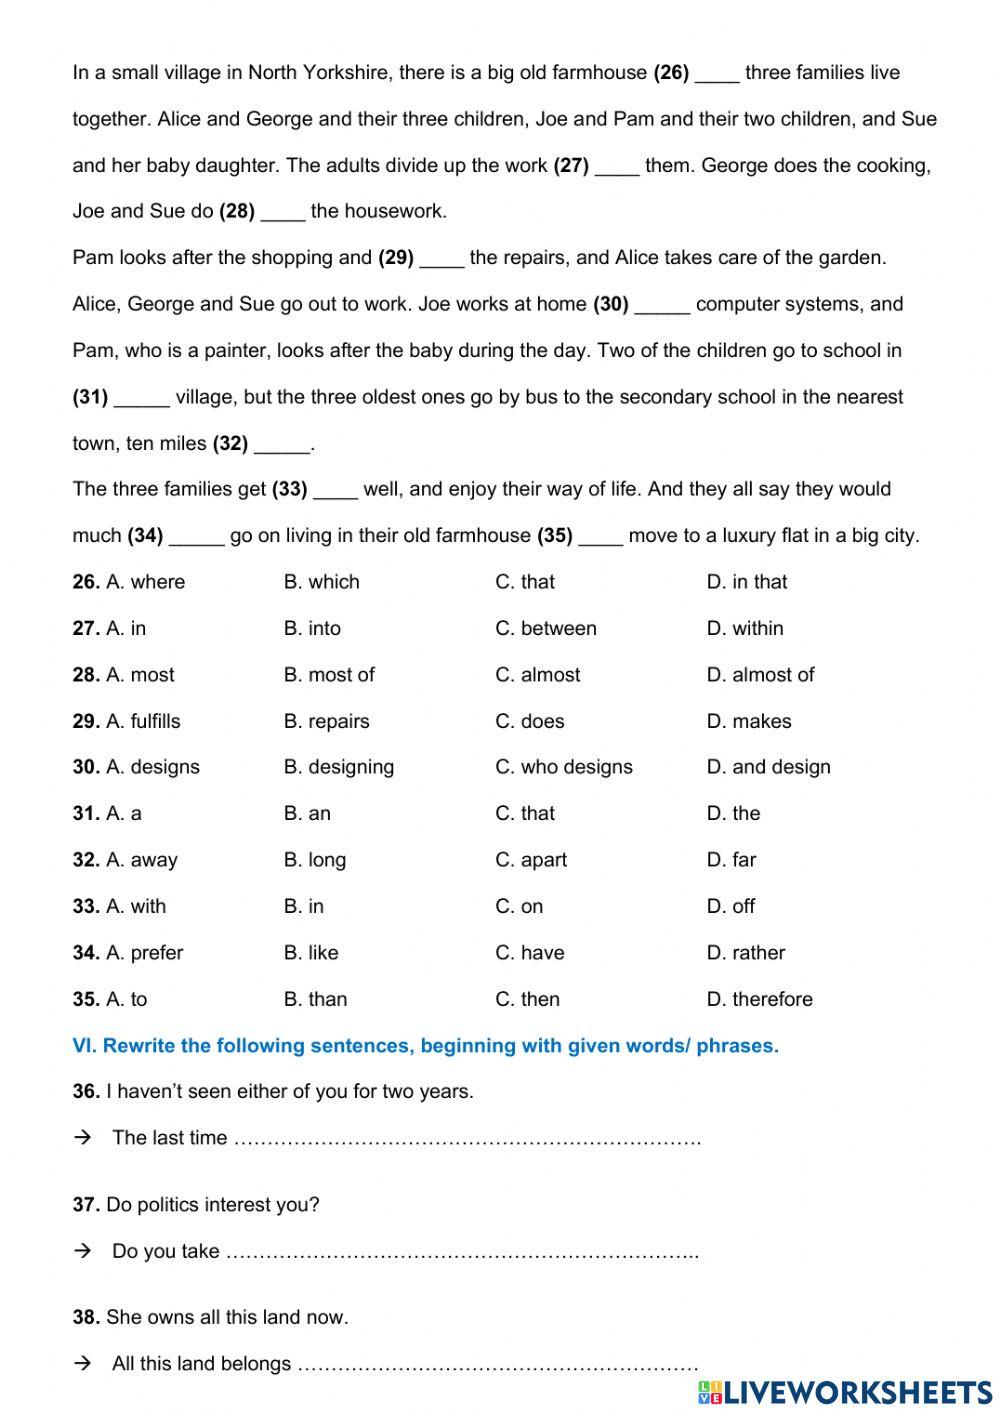 MOET English G12 - Sample Test (Units 1&2)